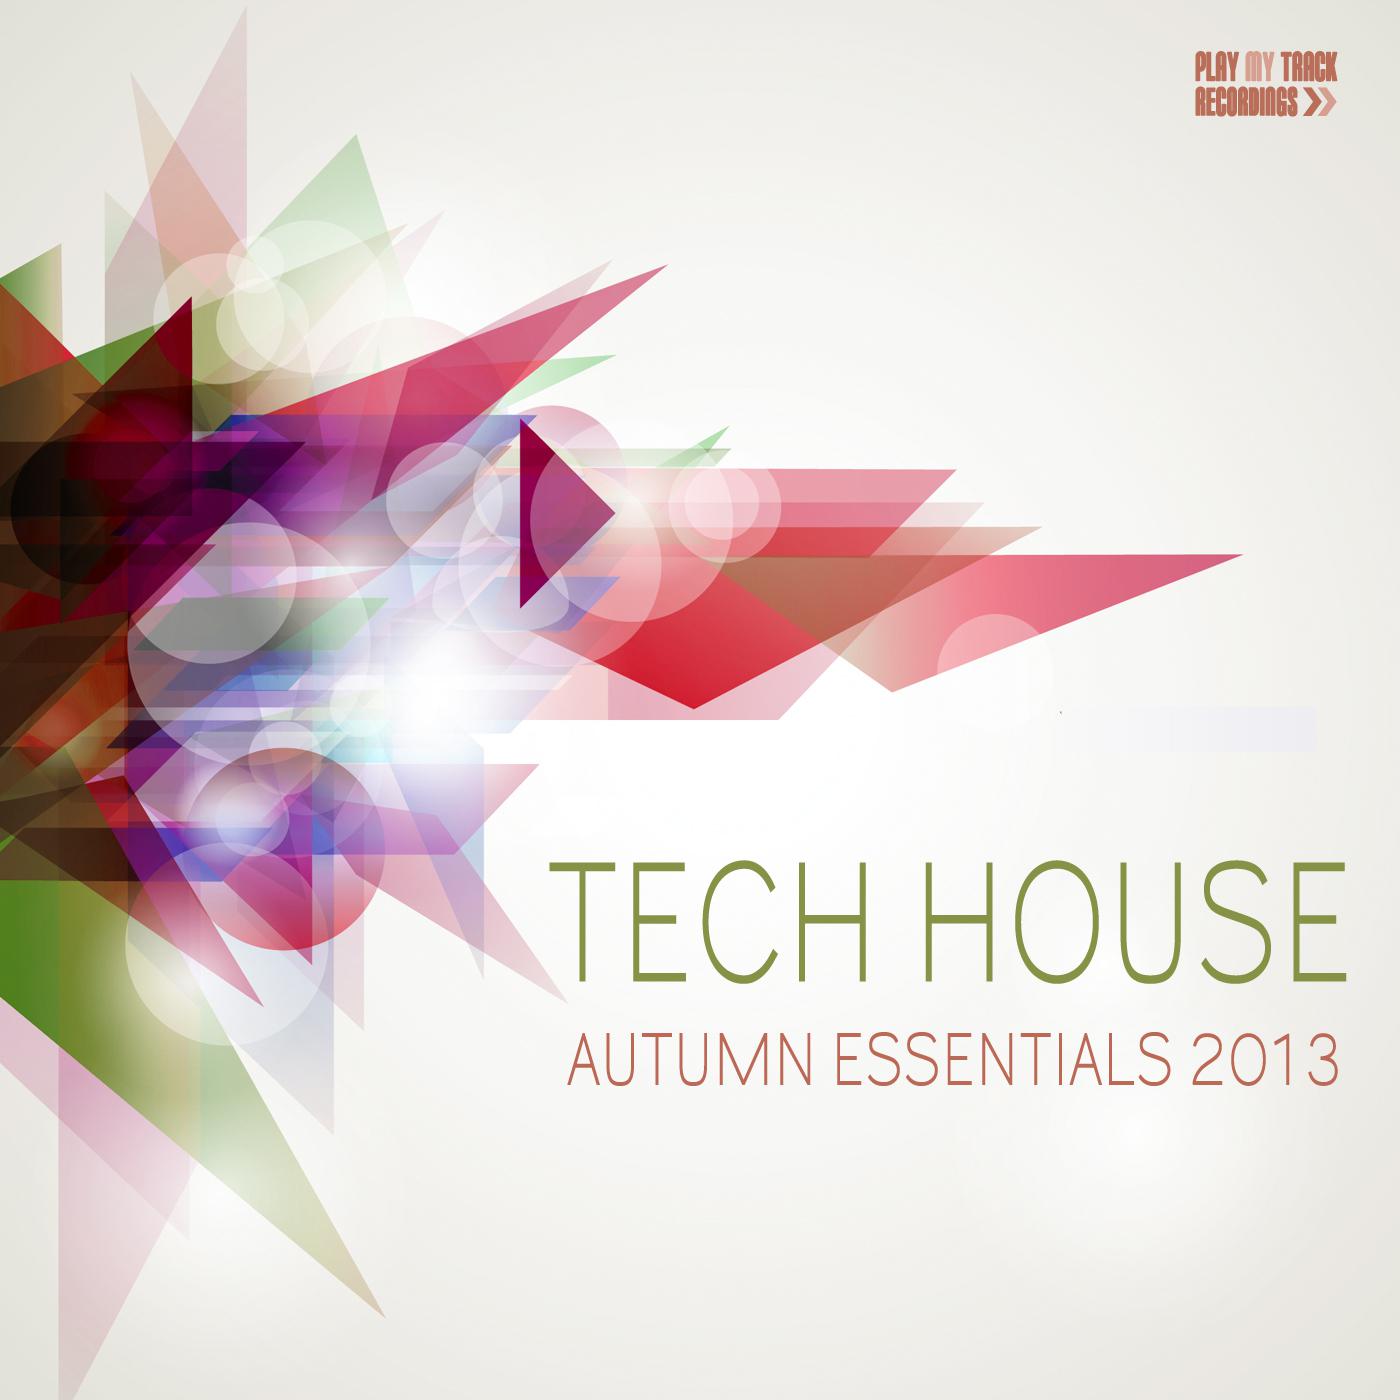 Tech House Autumn Essentials 2013